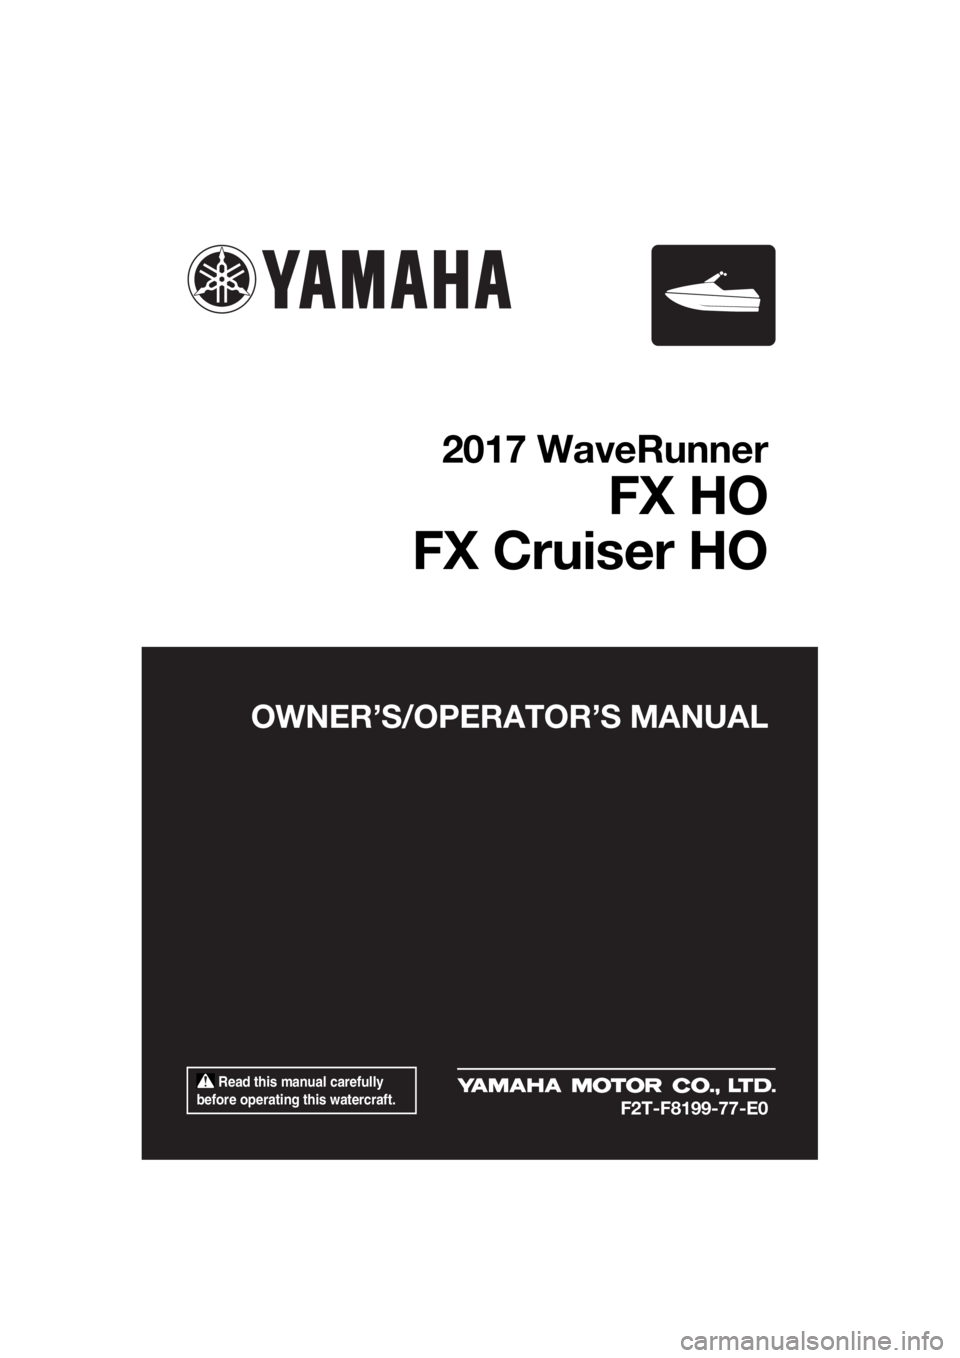 YAMAHA FX HO 2017  Owners Manual 